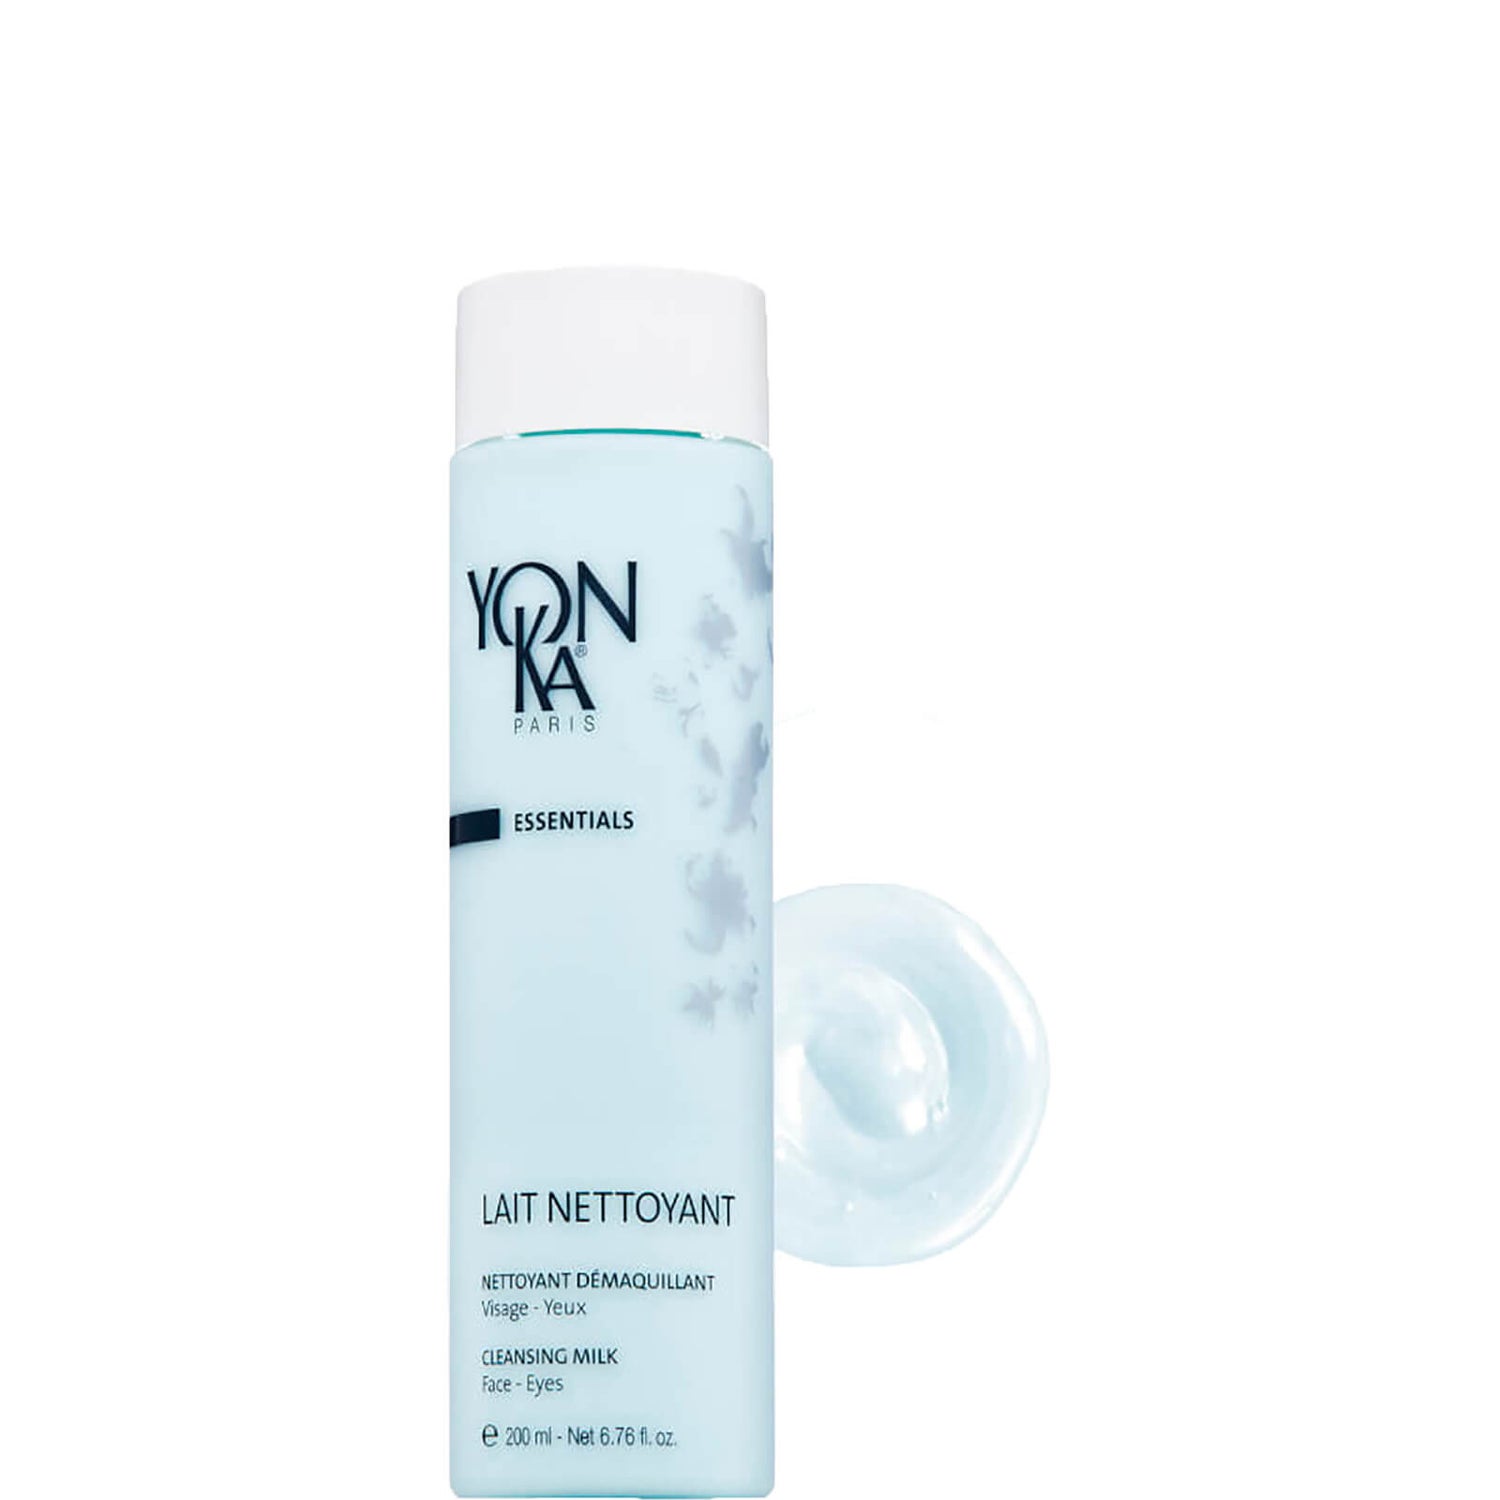 Yon-Ka Paris Skincare Lait Nettoyant Cleansing Milk (6.76 fl. oz.)